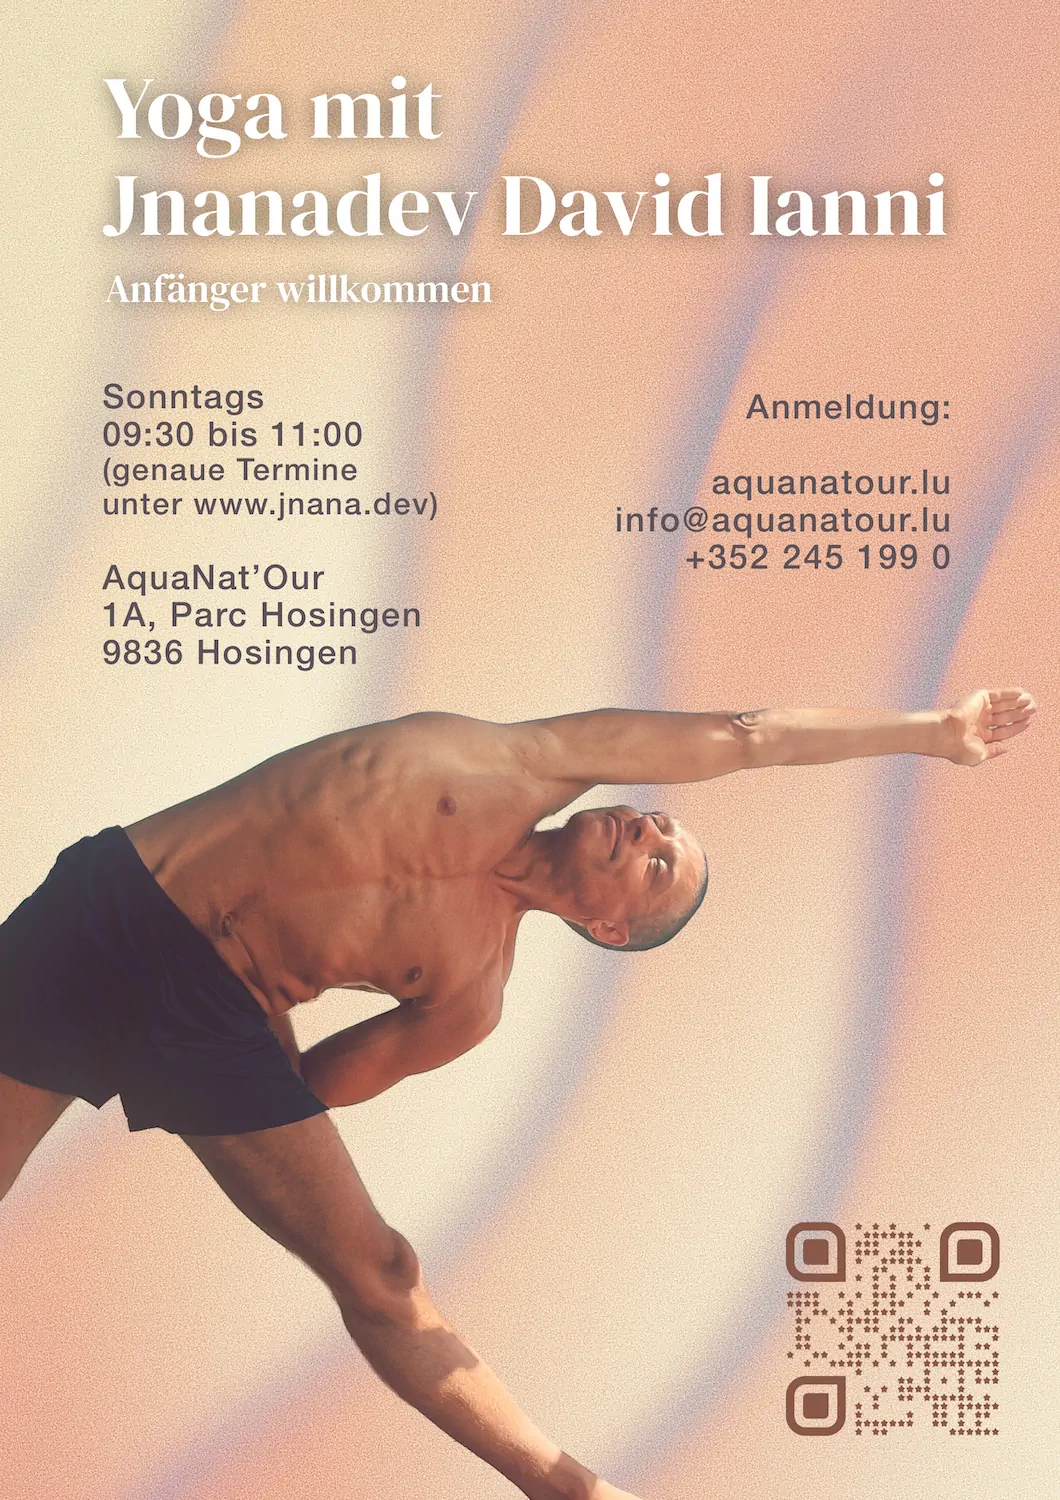 Plakat für Yoga mit Jnanadev im Aquanat’our